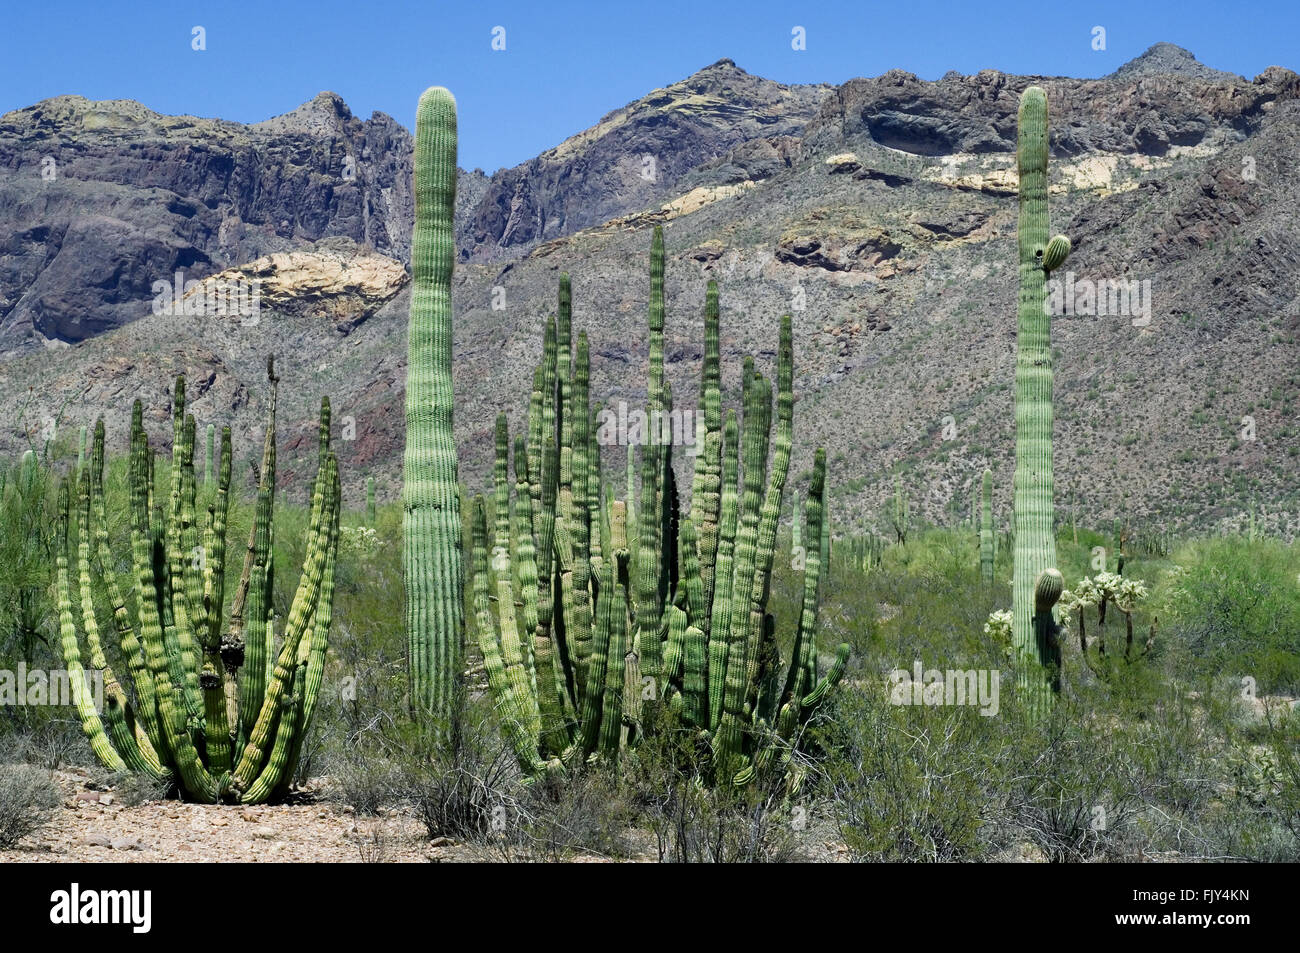 Saguaro cactus (Carnegiea gigantea) and organ pipe cacti (Stenocereus thurberi), Sonoran desert, Arizona, USA Stock Photo